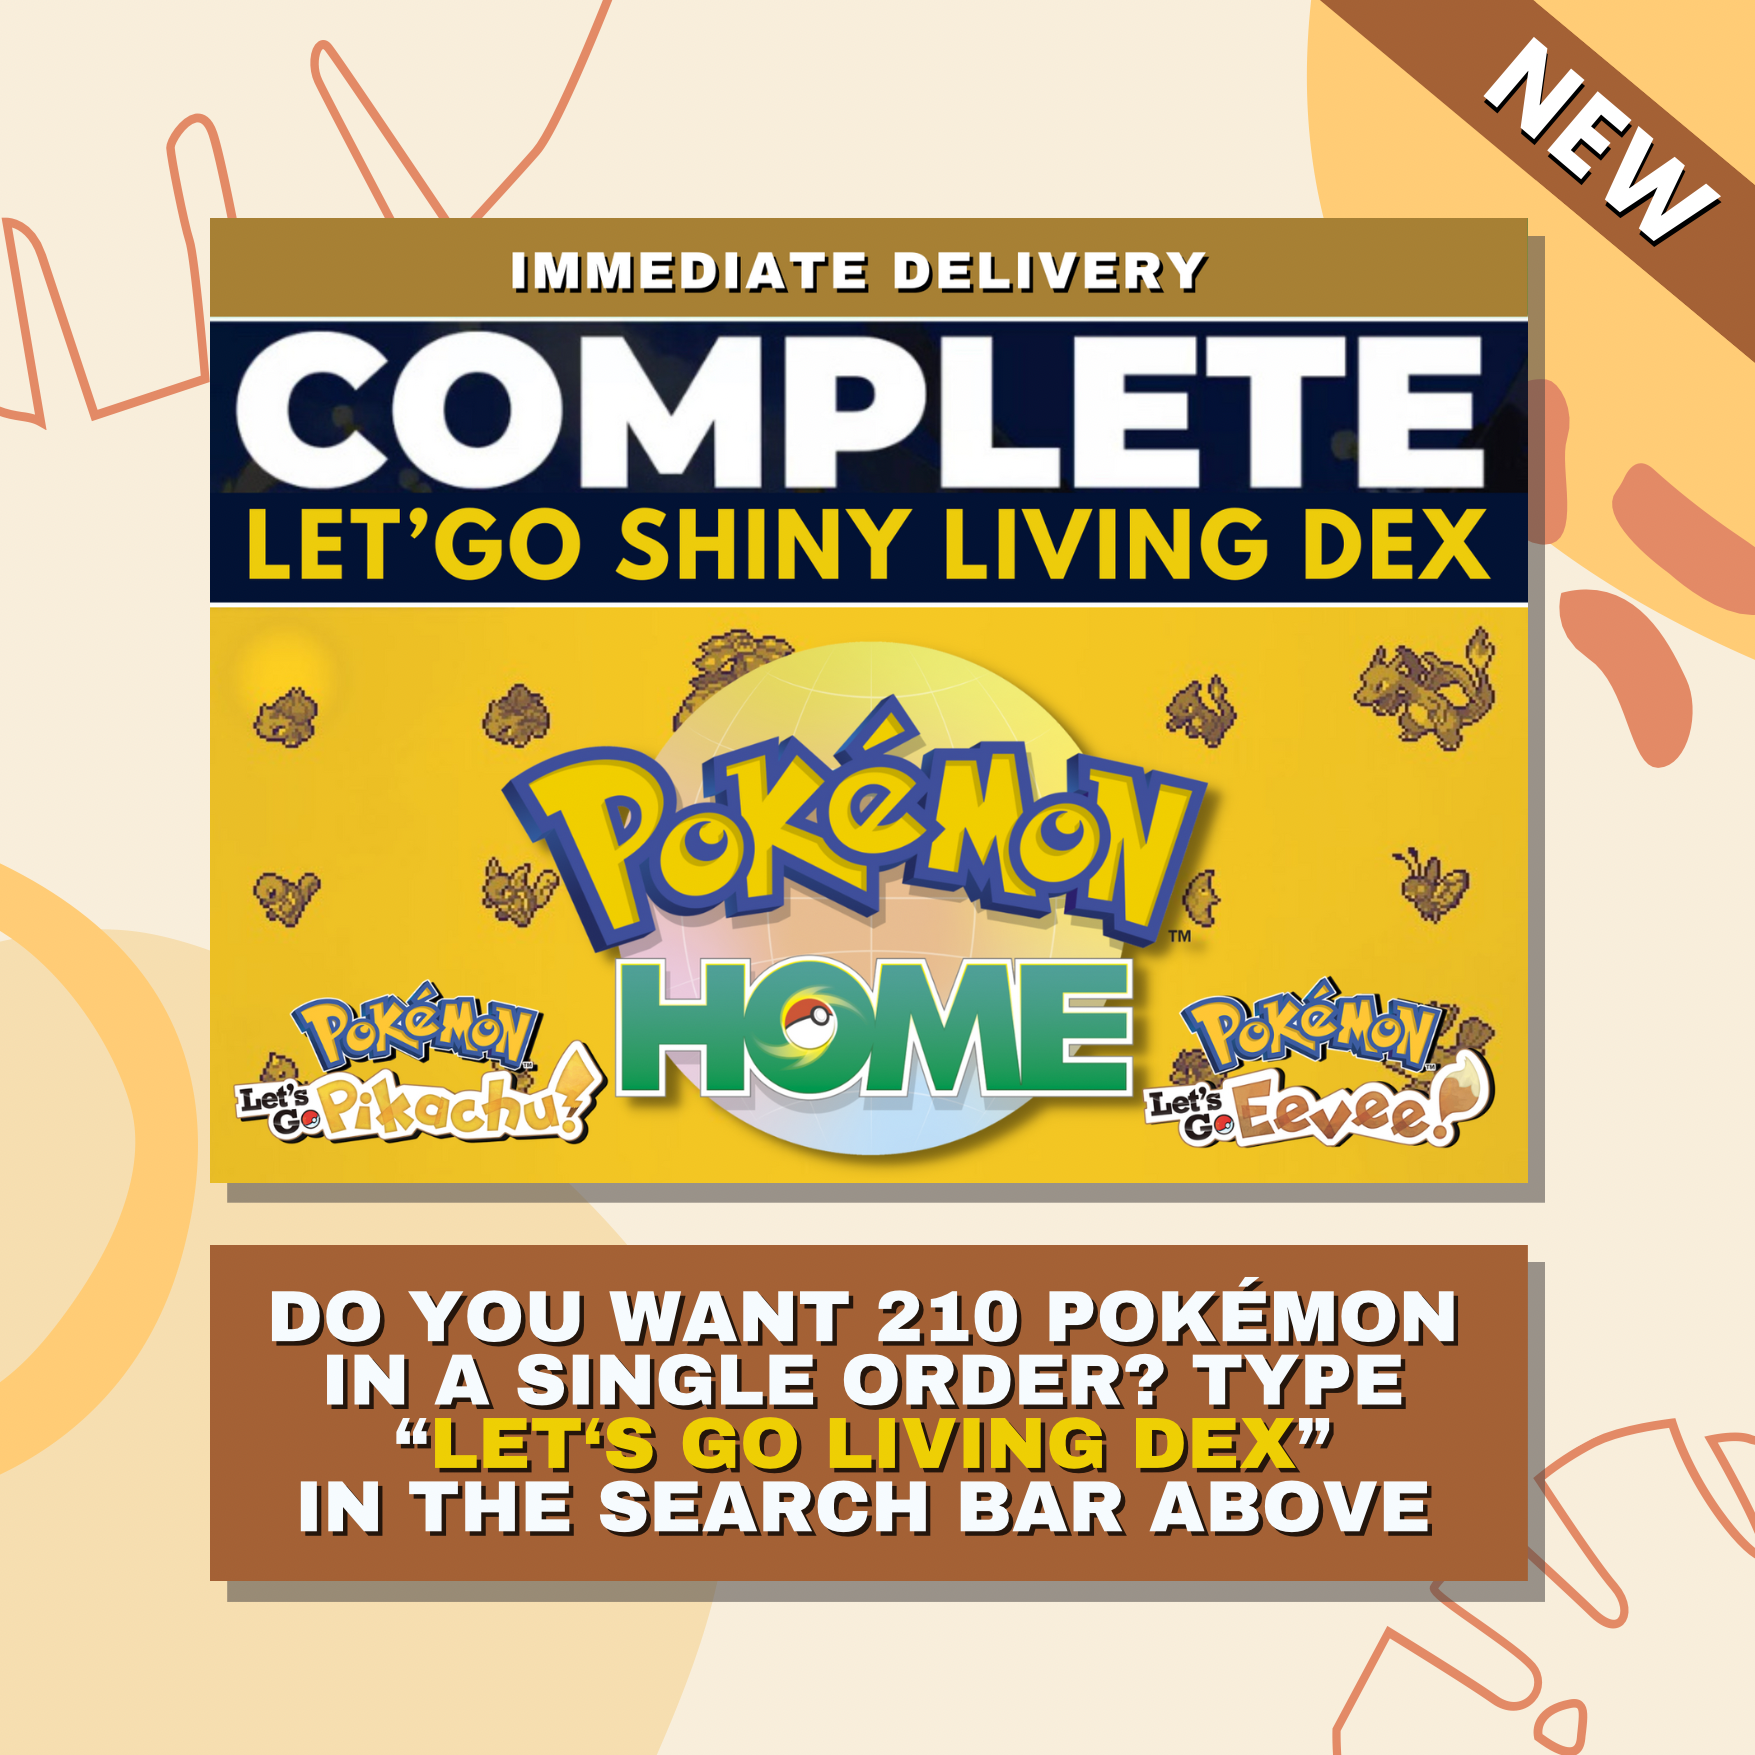 Hitmonlee Shiny ✨ or Non Shiny Pokémon Let's Go Pikachu Eevee Level 100 Competitive Battle Ready 6 IV 100% Legit Legal Customizable Custom OT by Shiny Living Dex | Shiny Living Dex